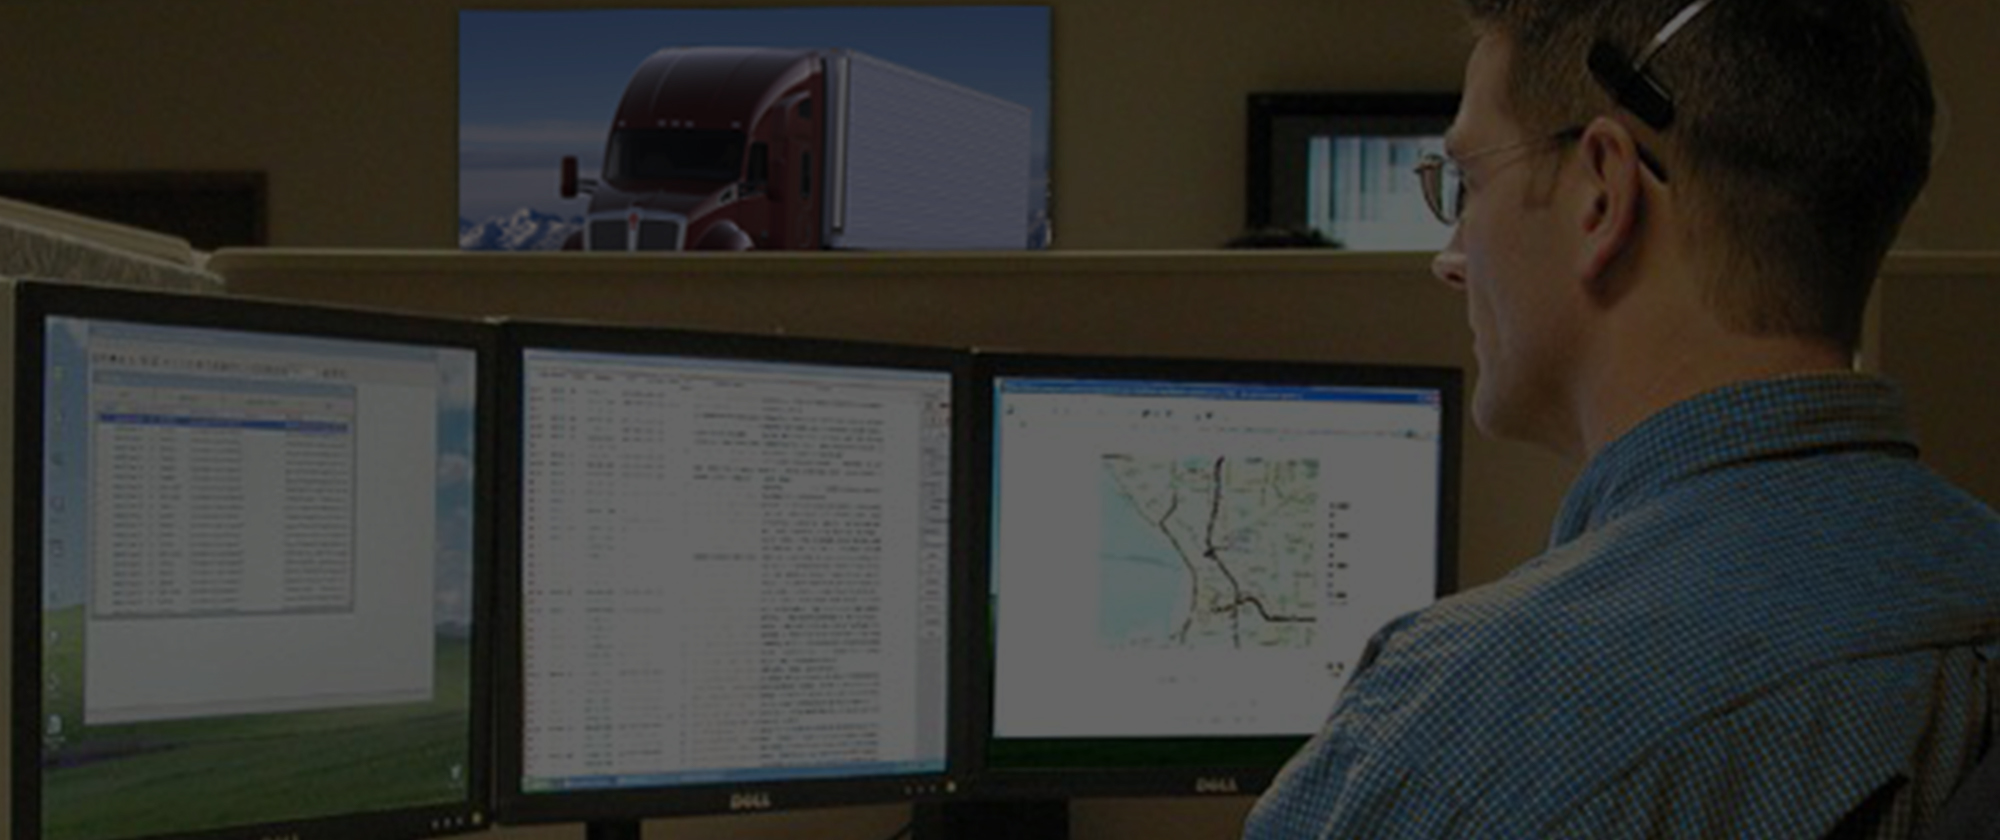 Fleet manager monitoring trucks on computer